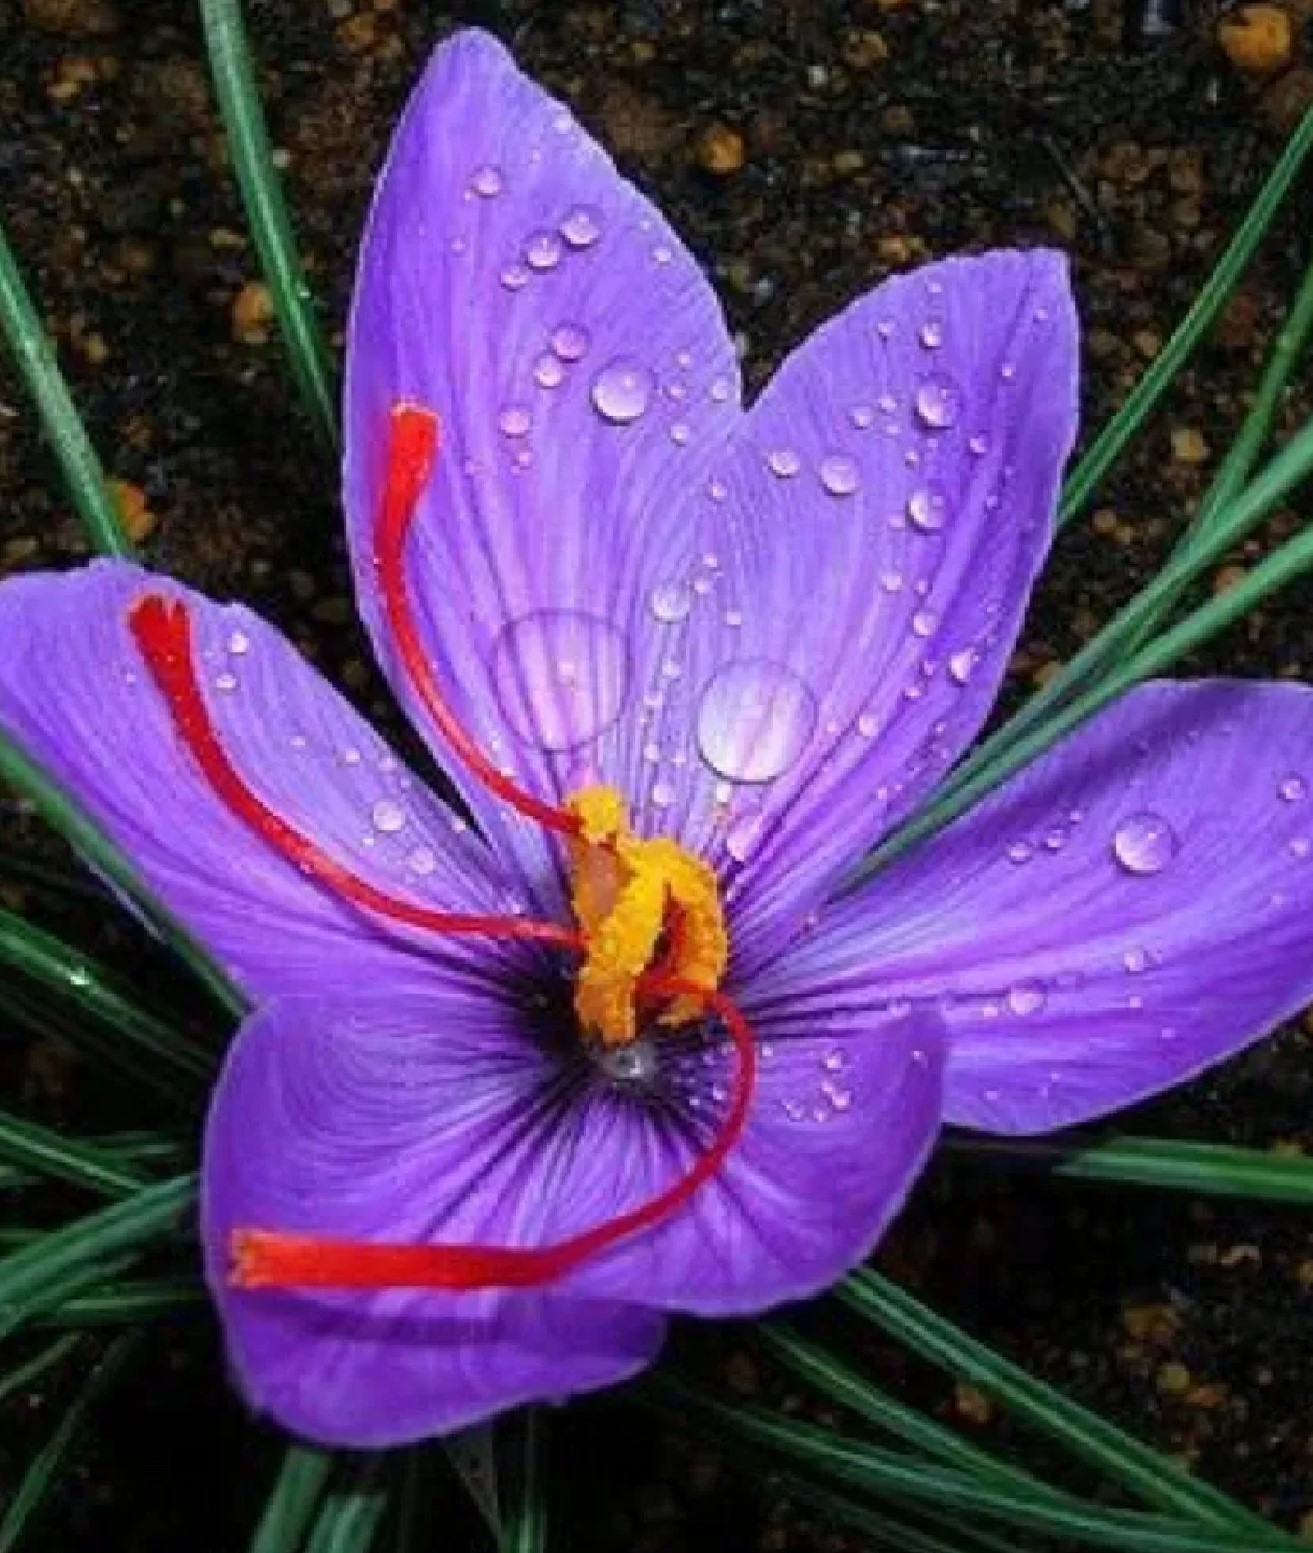 SAFRAN TUBE Prix au tube 1gr, Stigmate poudre (Crocus sativus